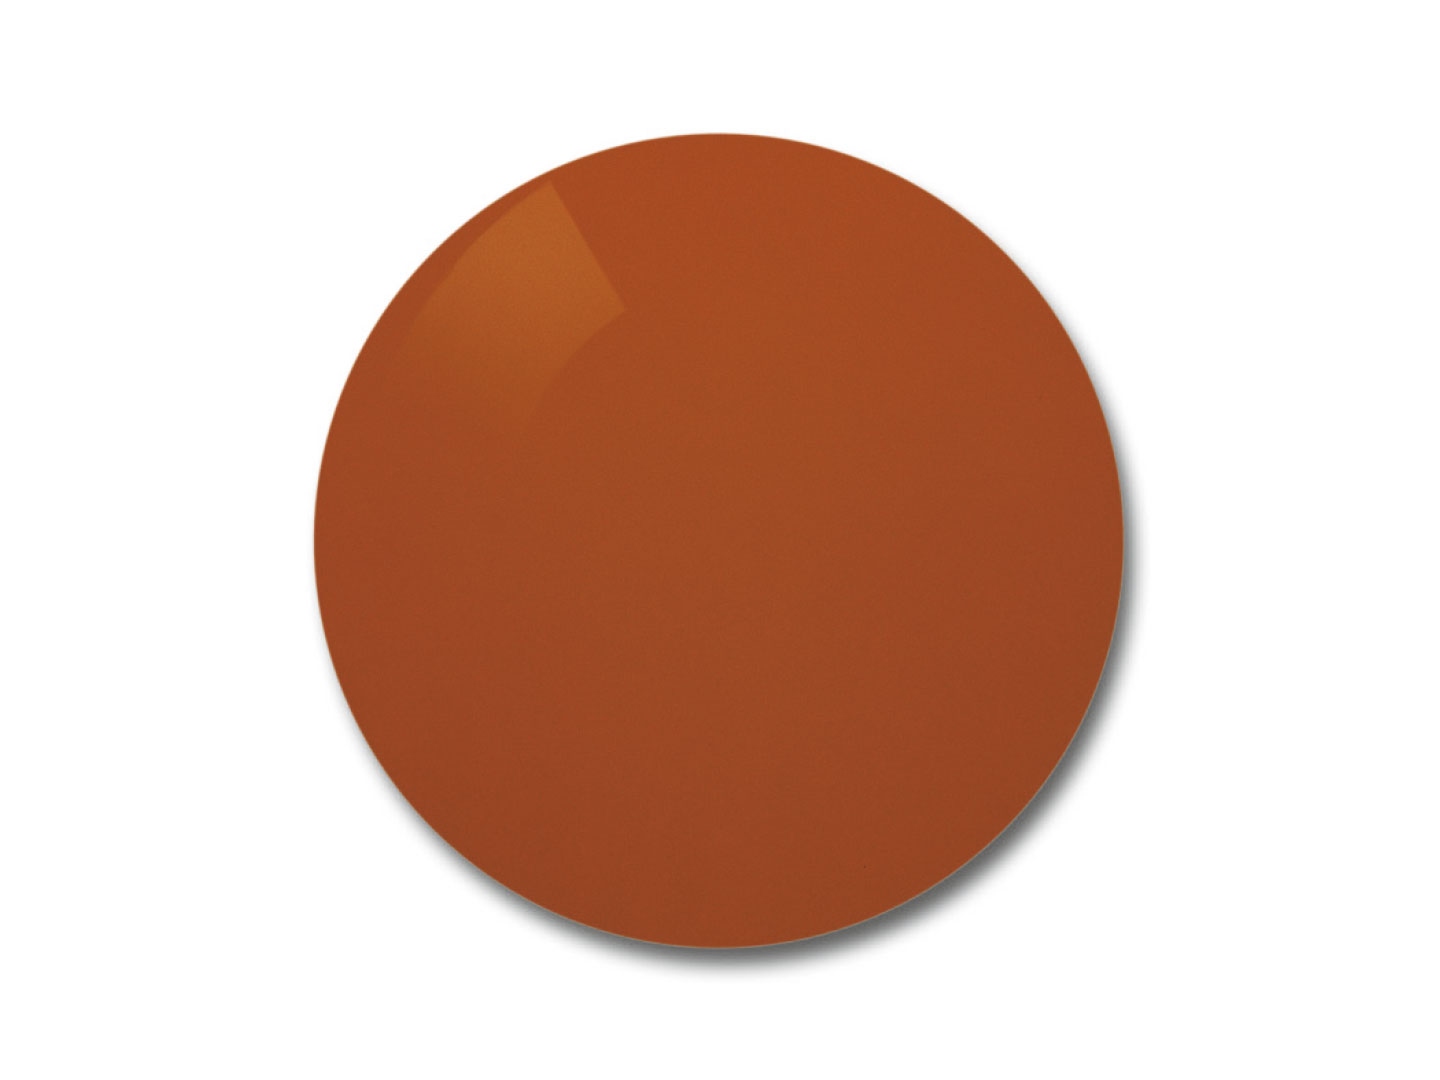 Colour example for the Polarised Skylet Fun lenses.